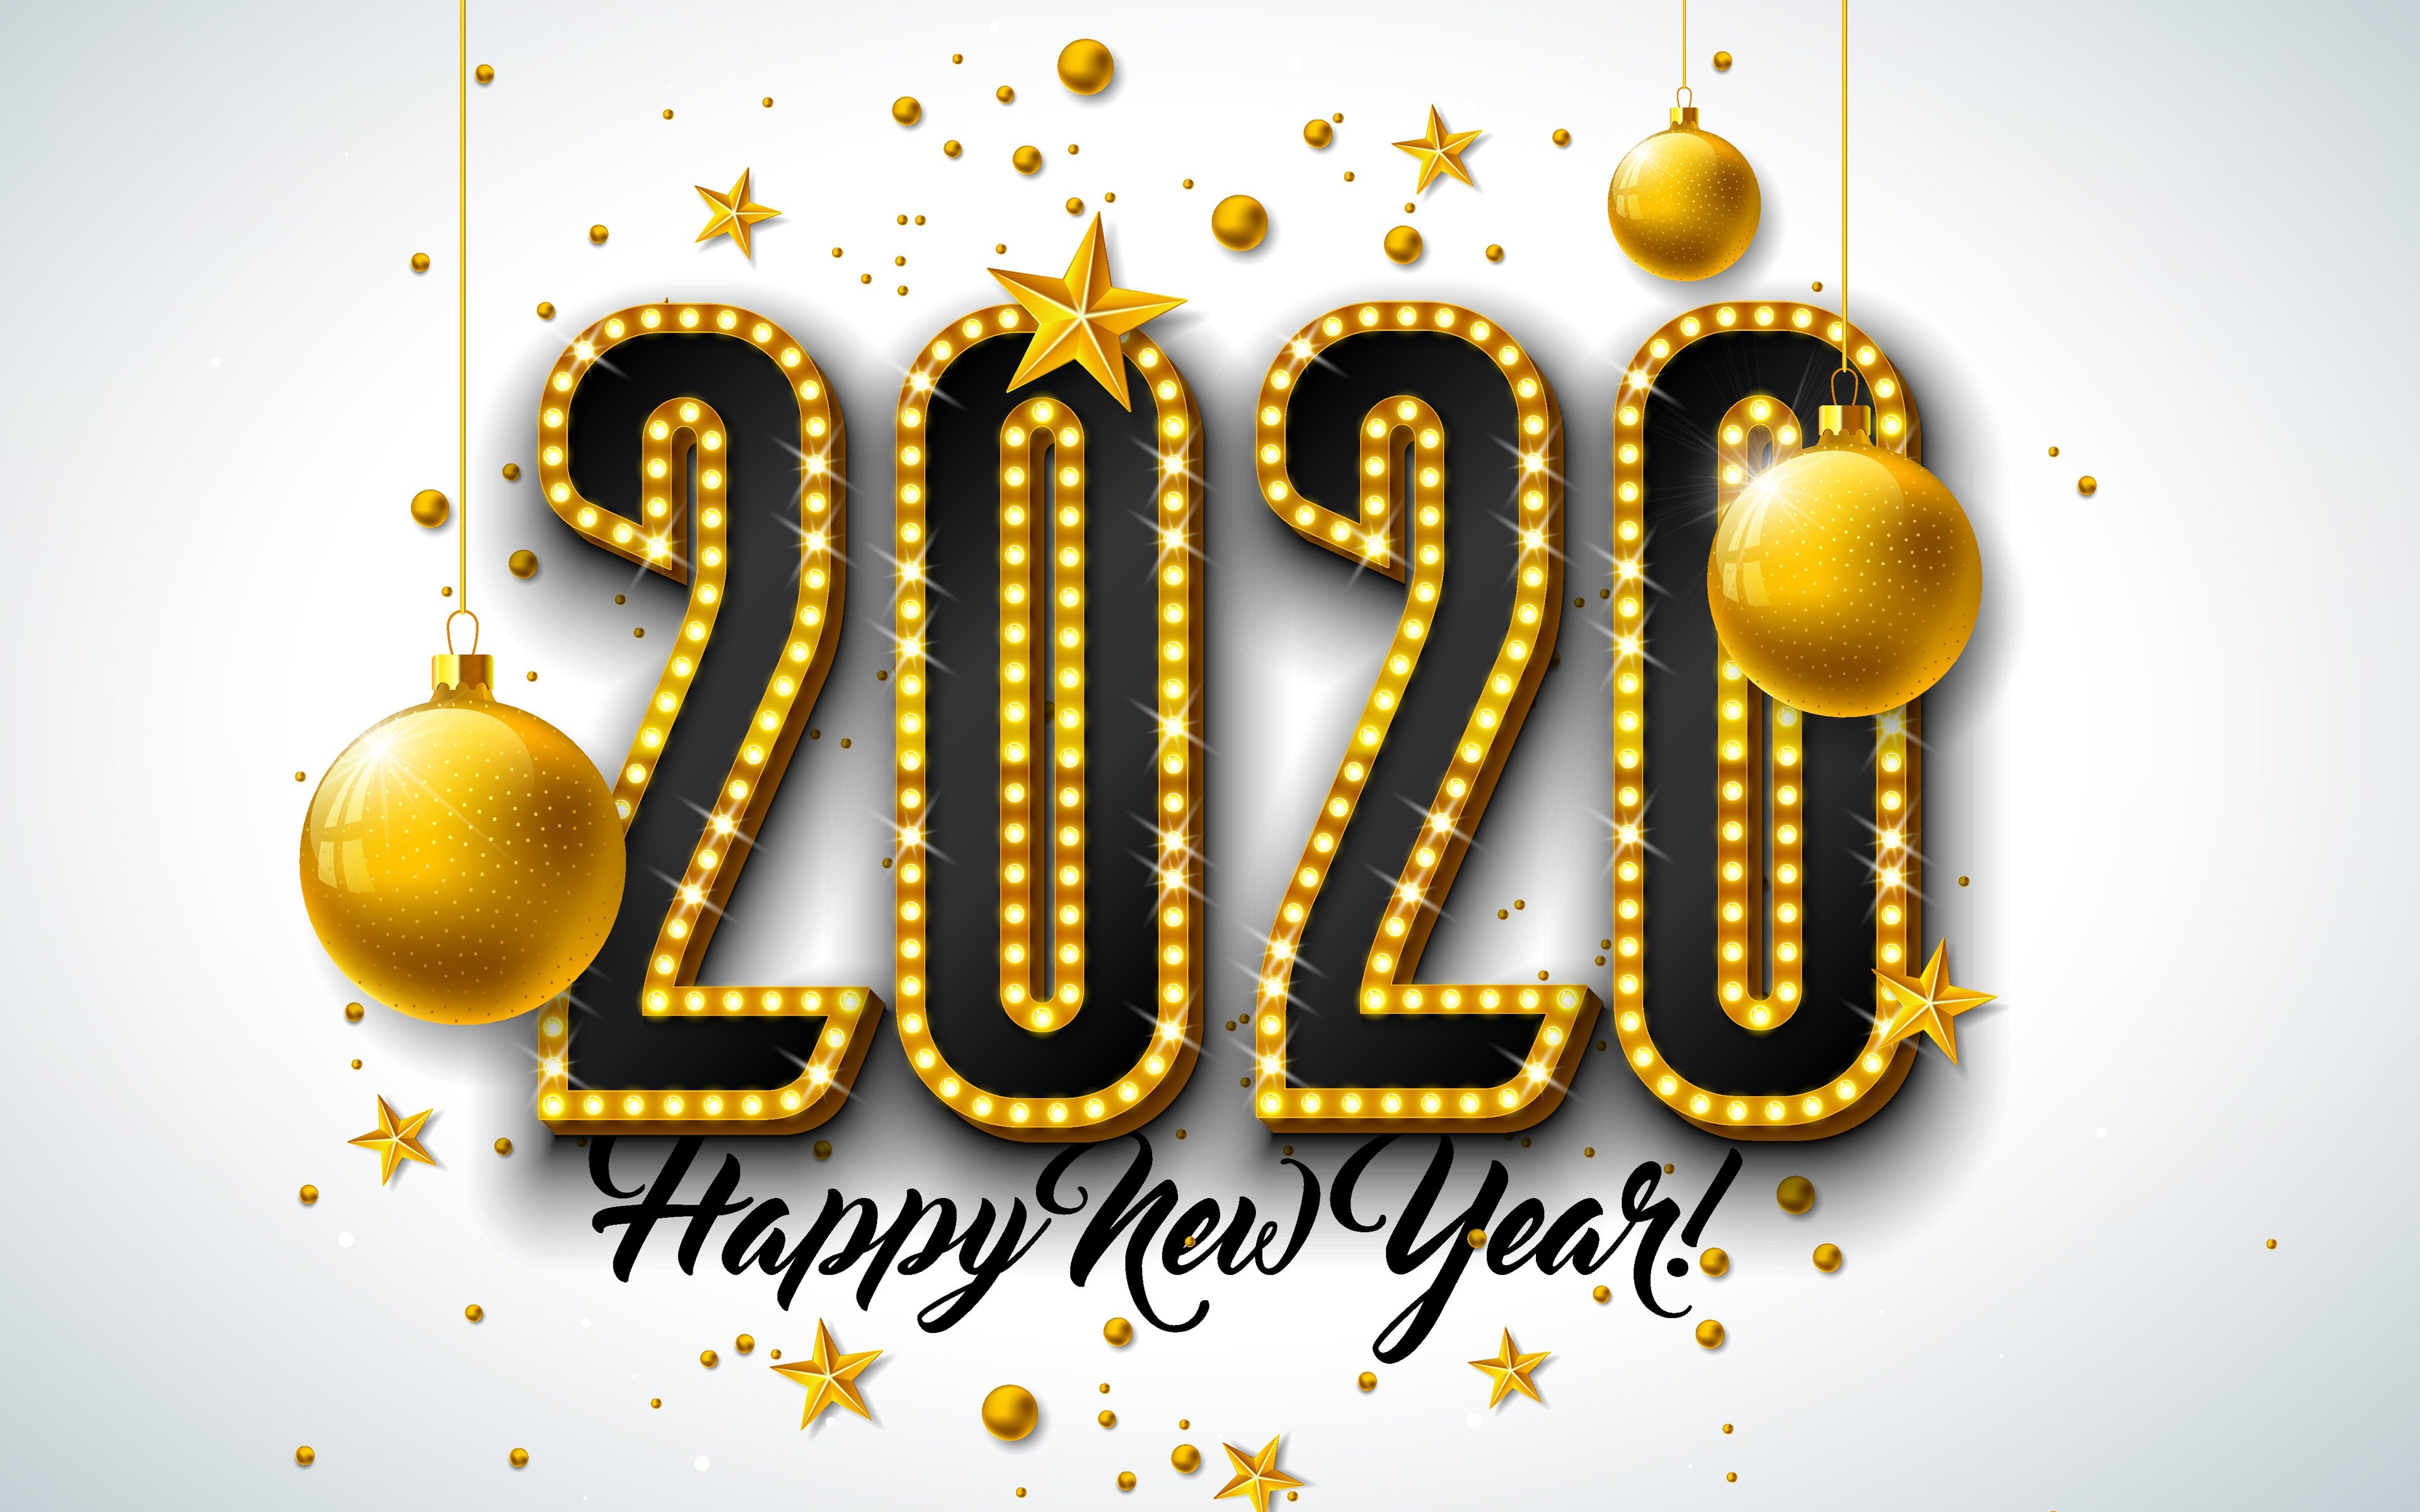 New Year 2020 4k Ultra HD Wallpaper Background Image 3840x2400